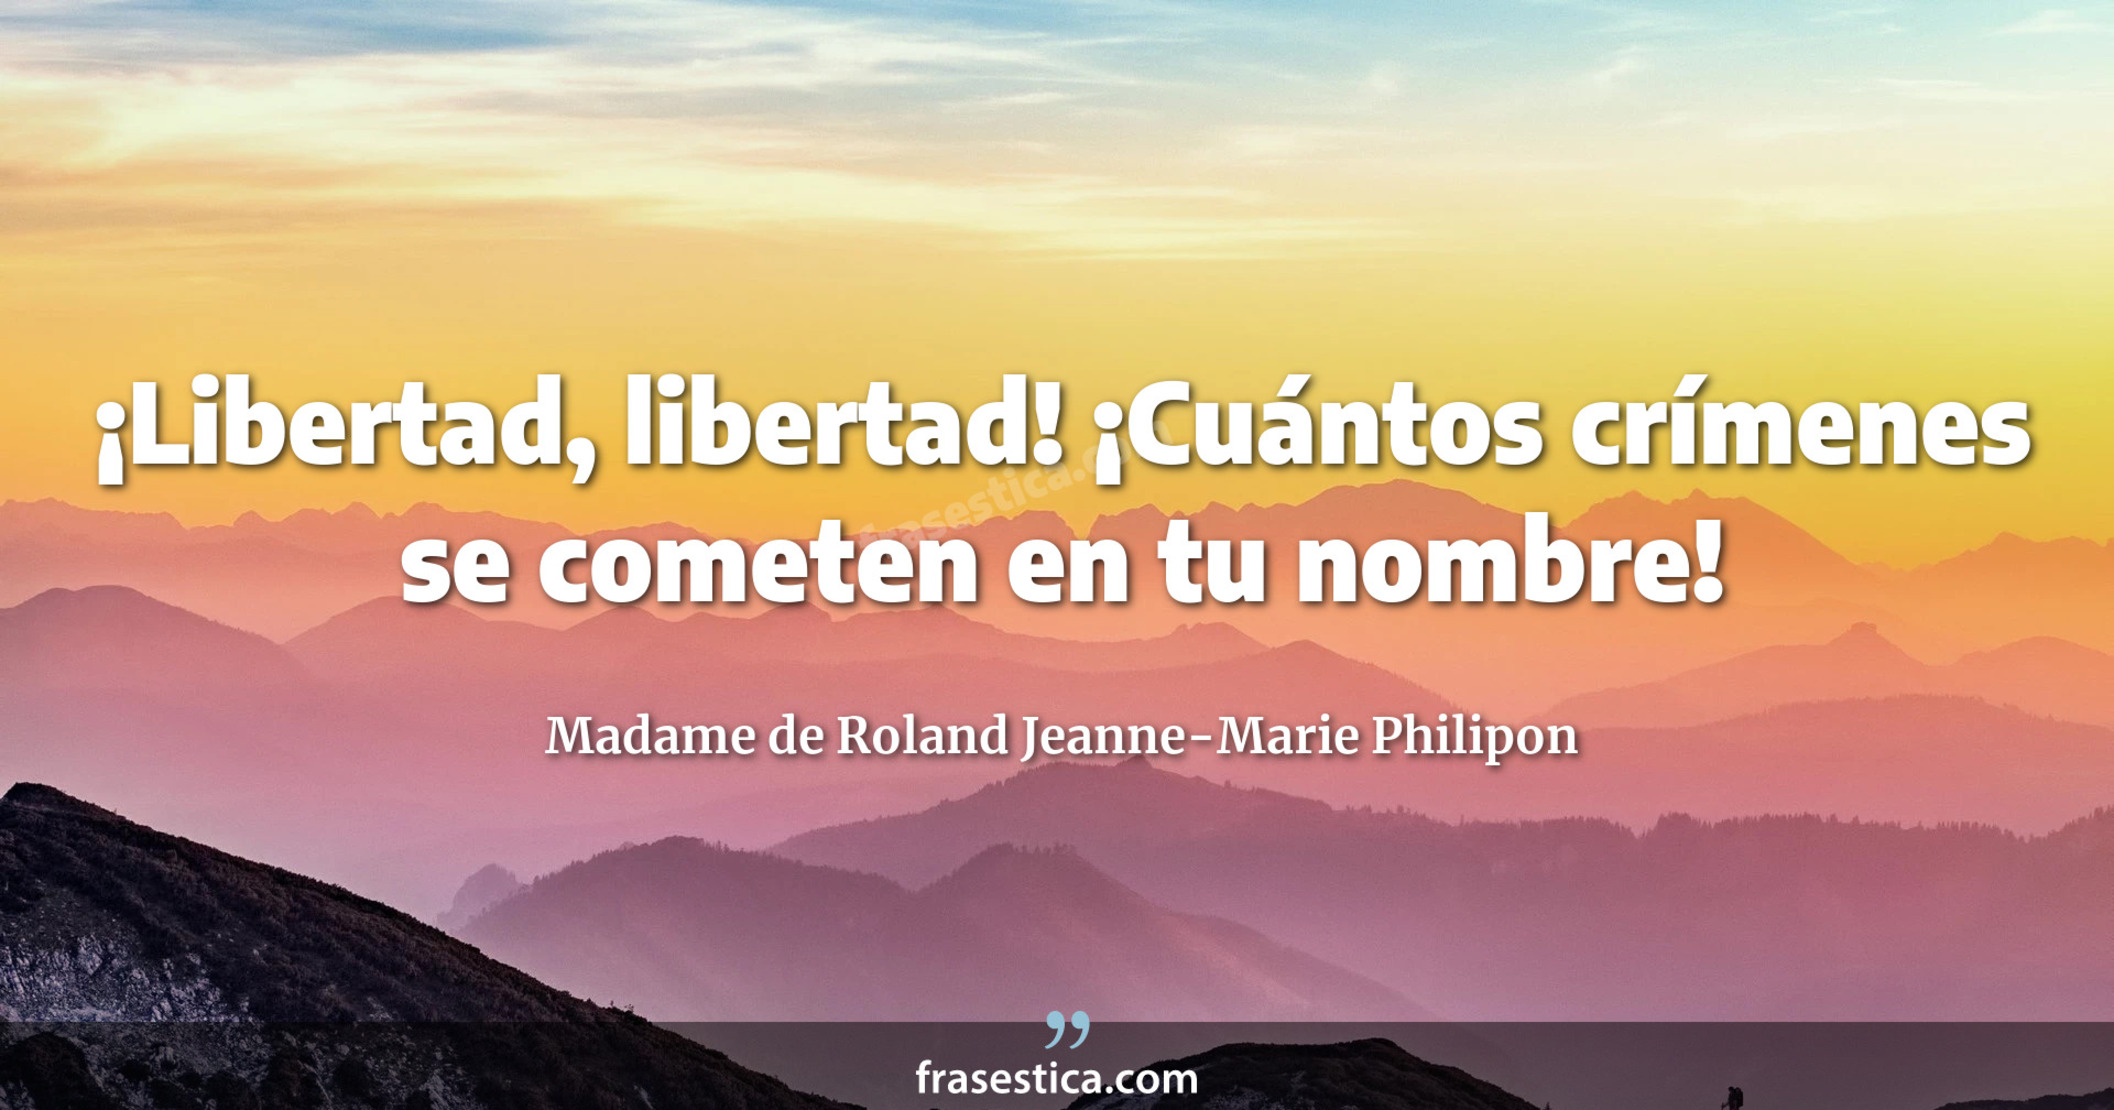 ¡Libertad, libertad! ¡Cuántos crímenes se cometen en tu nombre! - Madame de Roland Jeanne-Marie Philipon